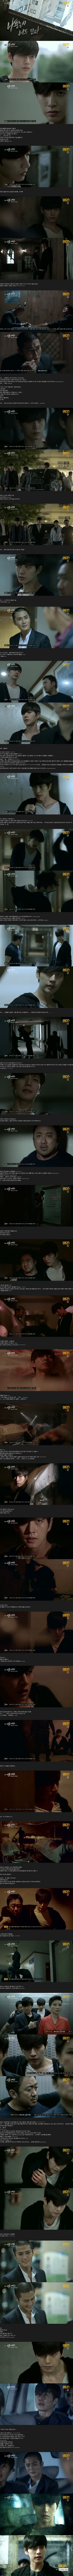 episode 4 captures for the Korean drama 'Bad Guys'